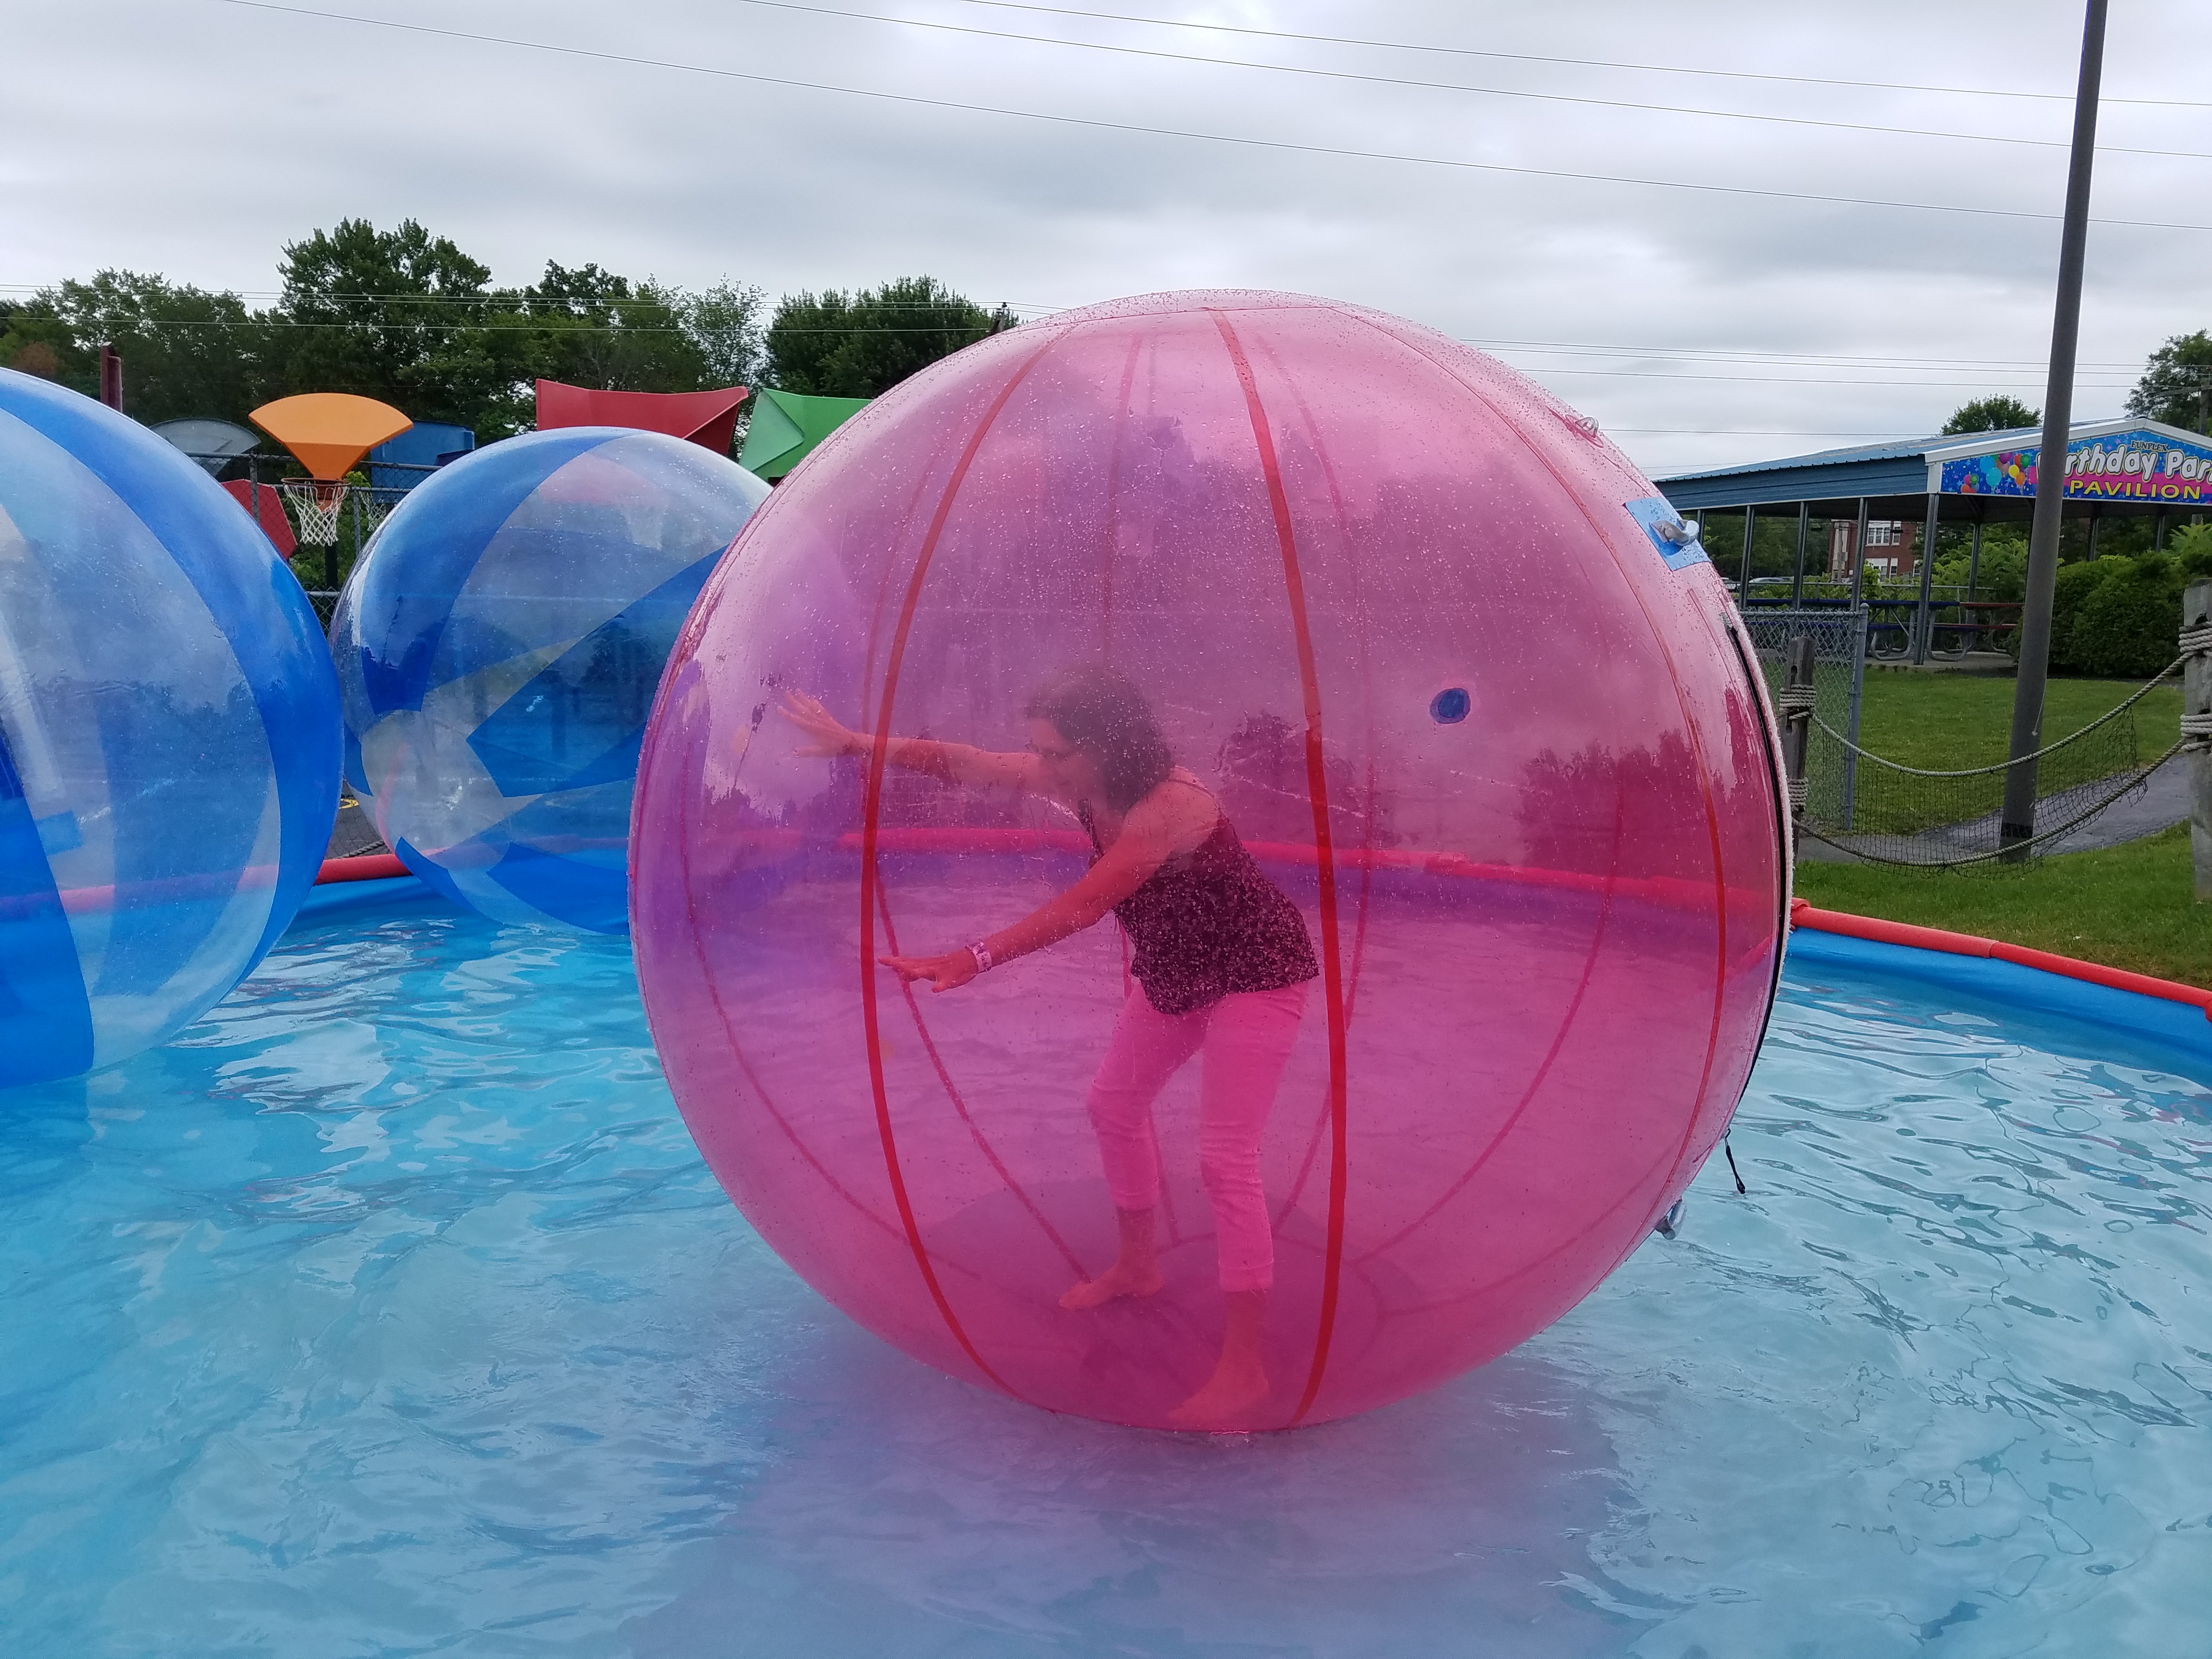 Human Hamster Ball activity at the 2017 Summer Outing